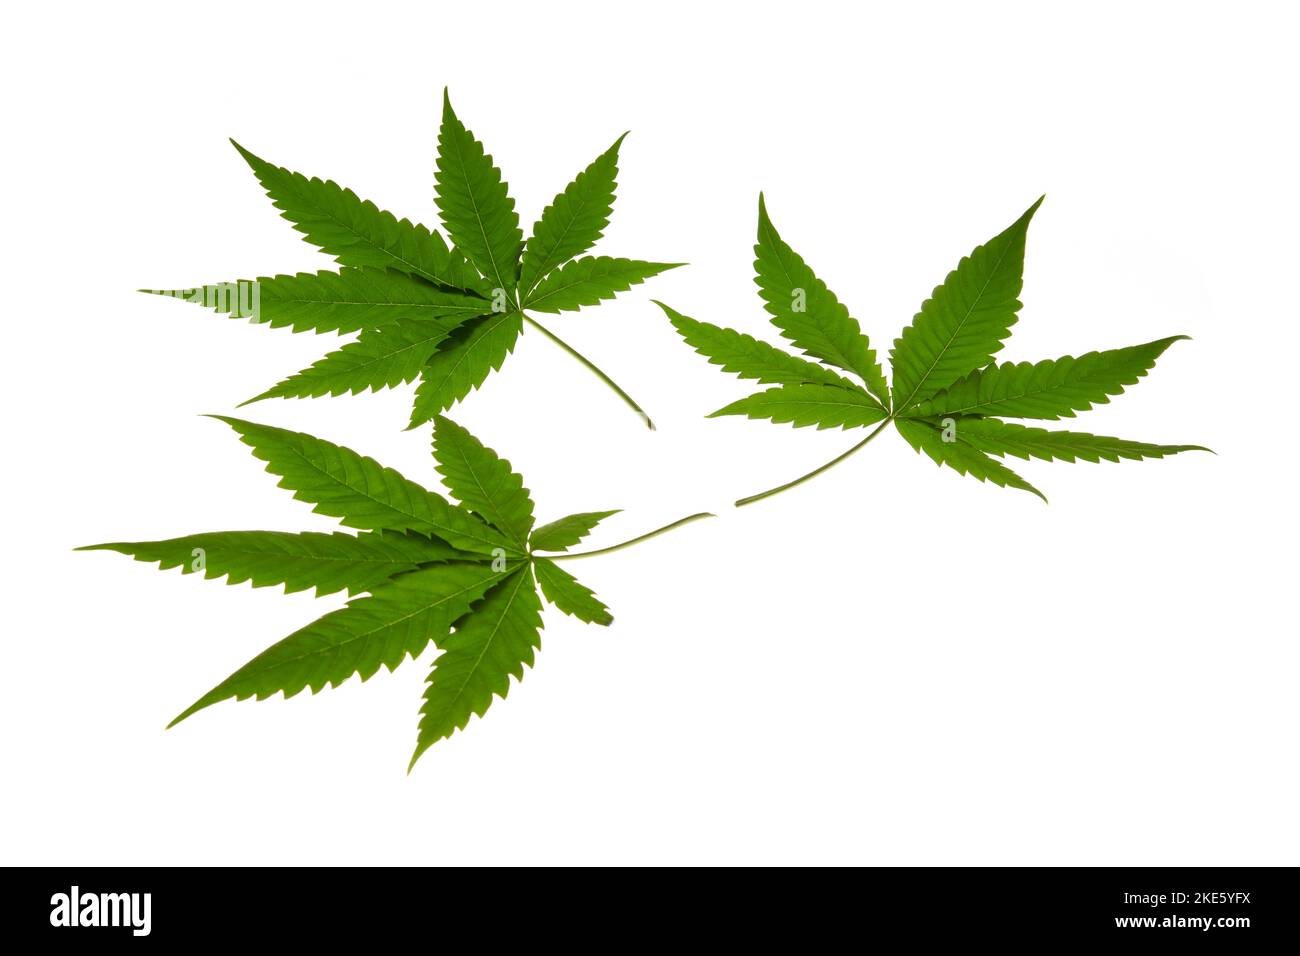 Green cannabis leaves isolated on white background. Growing medical marijuana. Horizontal photo. Stock Photo